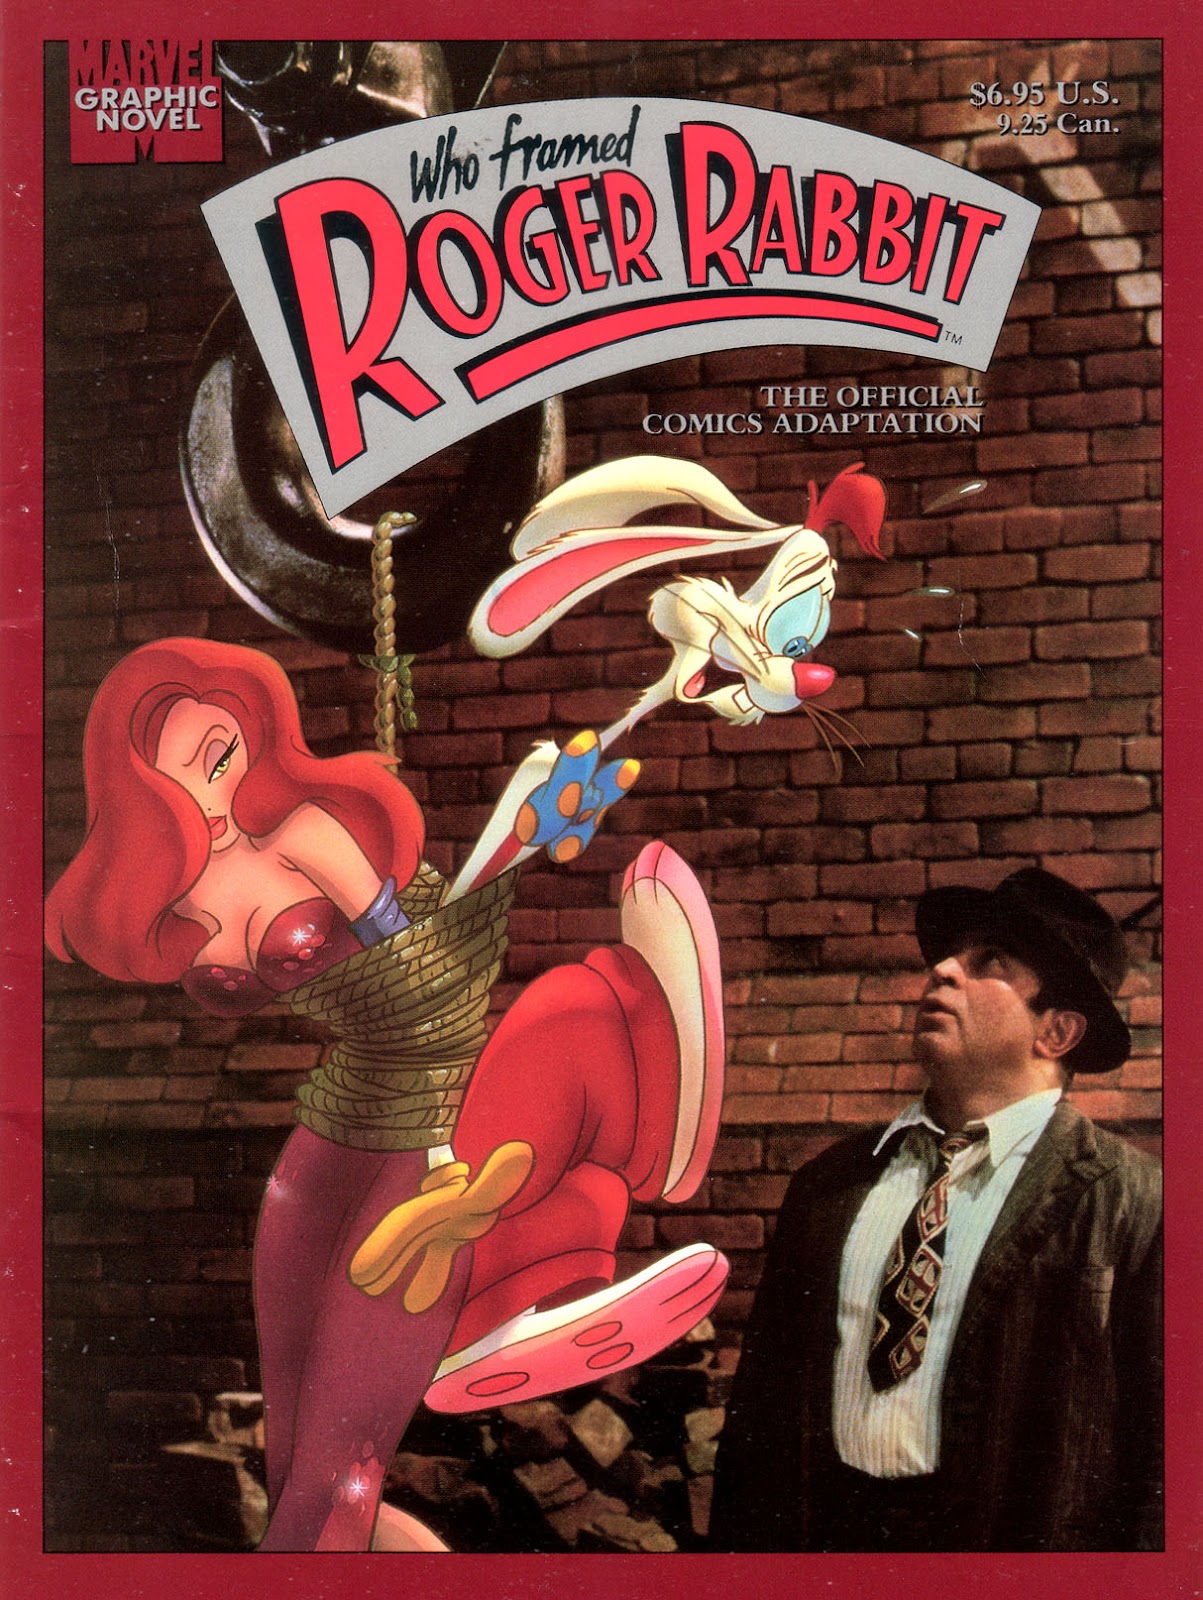 Marvel Graphic Novel issue 41 - Who Framed Roger Rabbit - Page 1